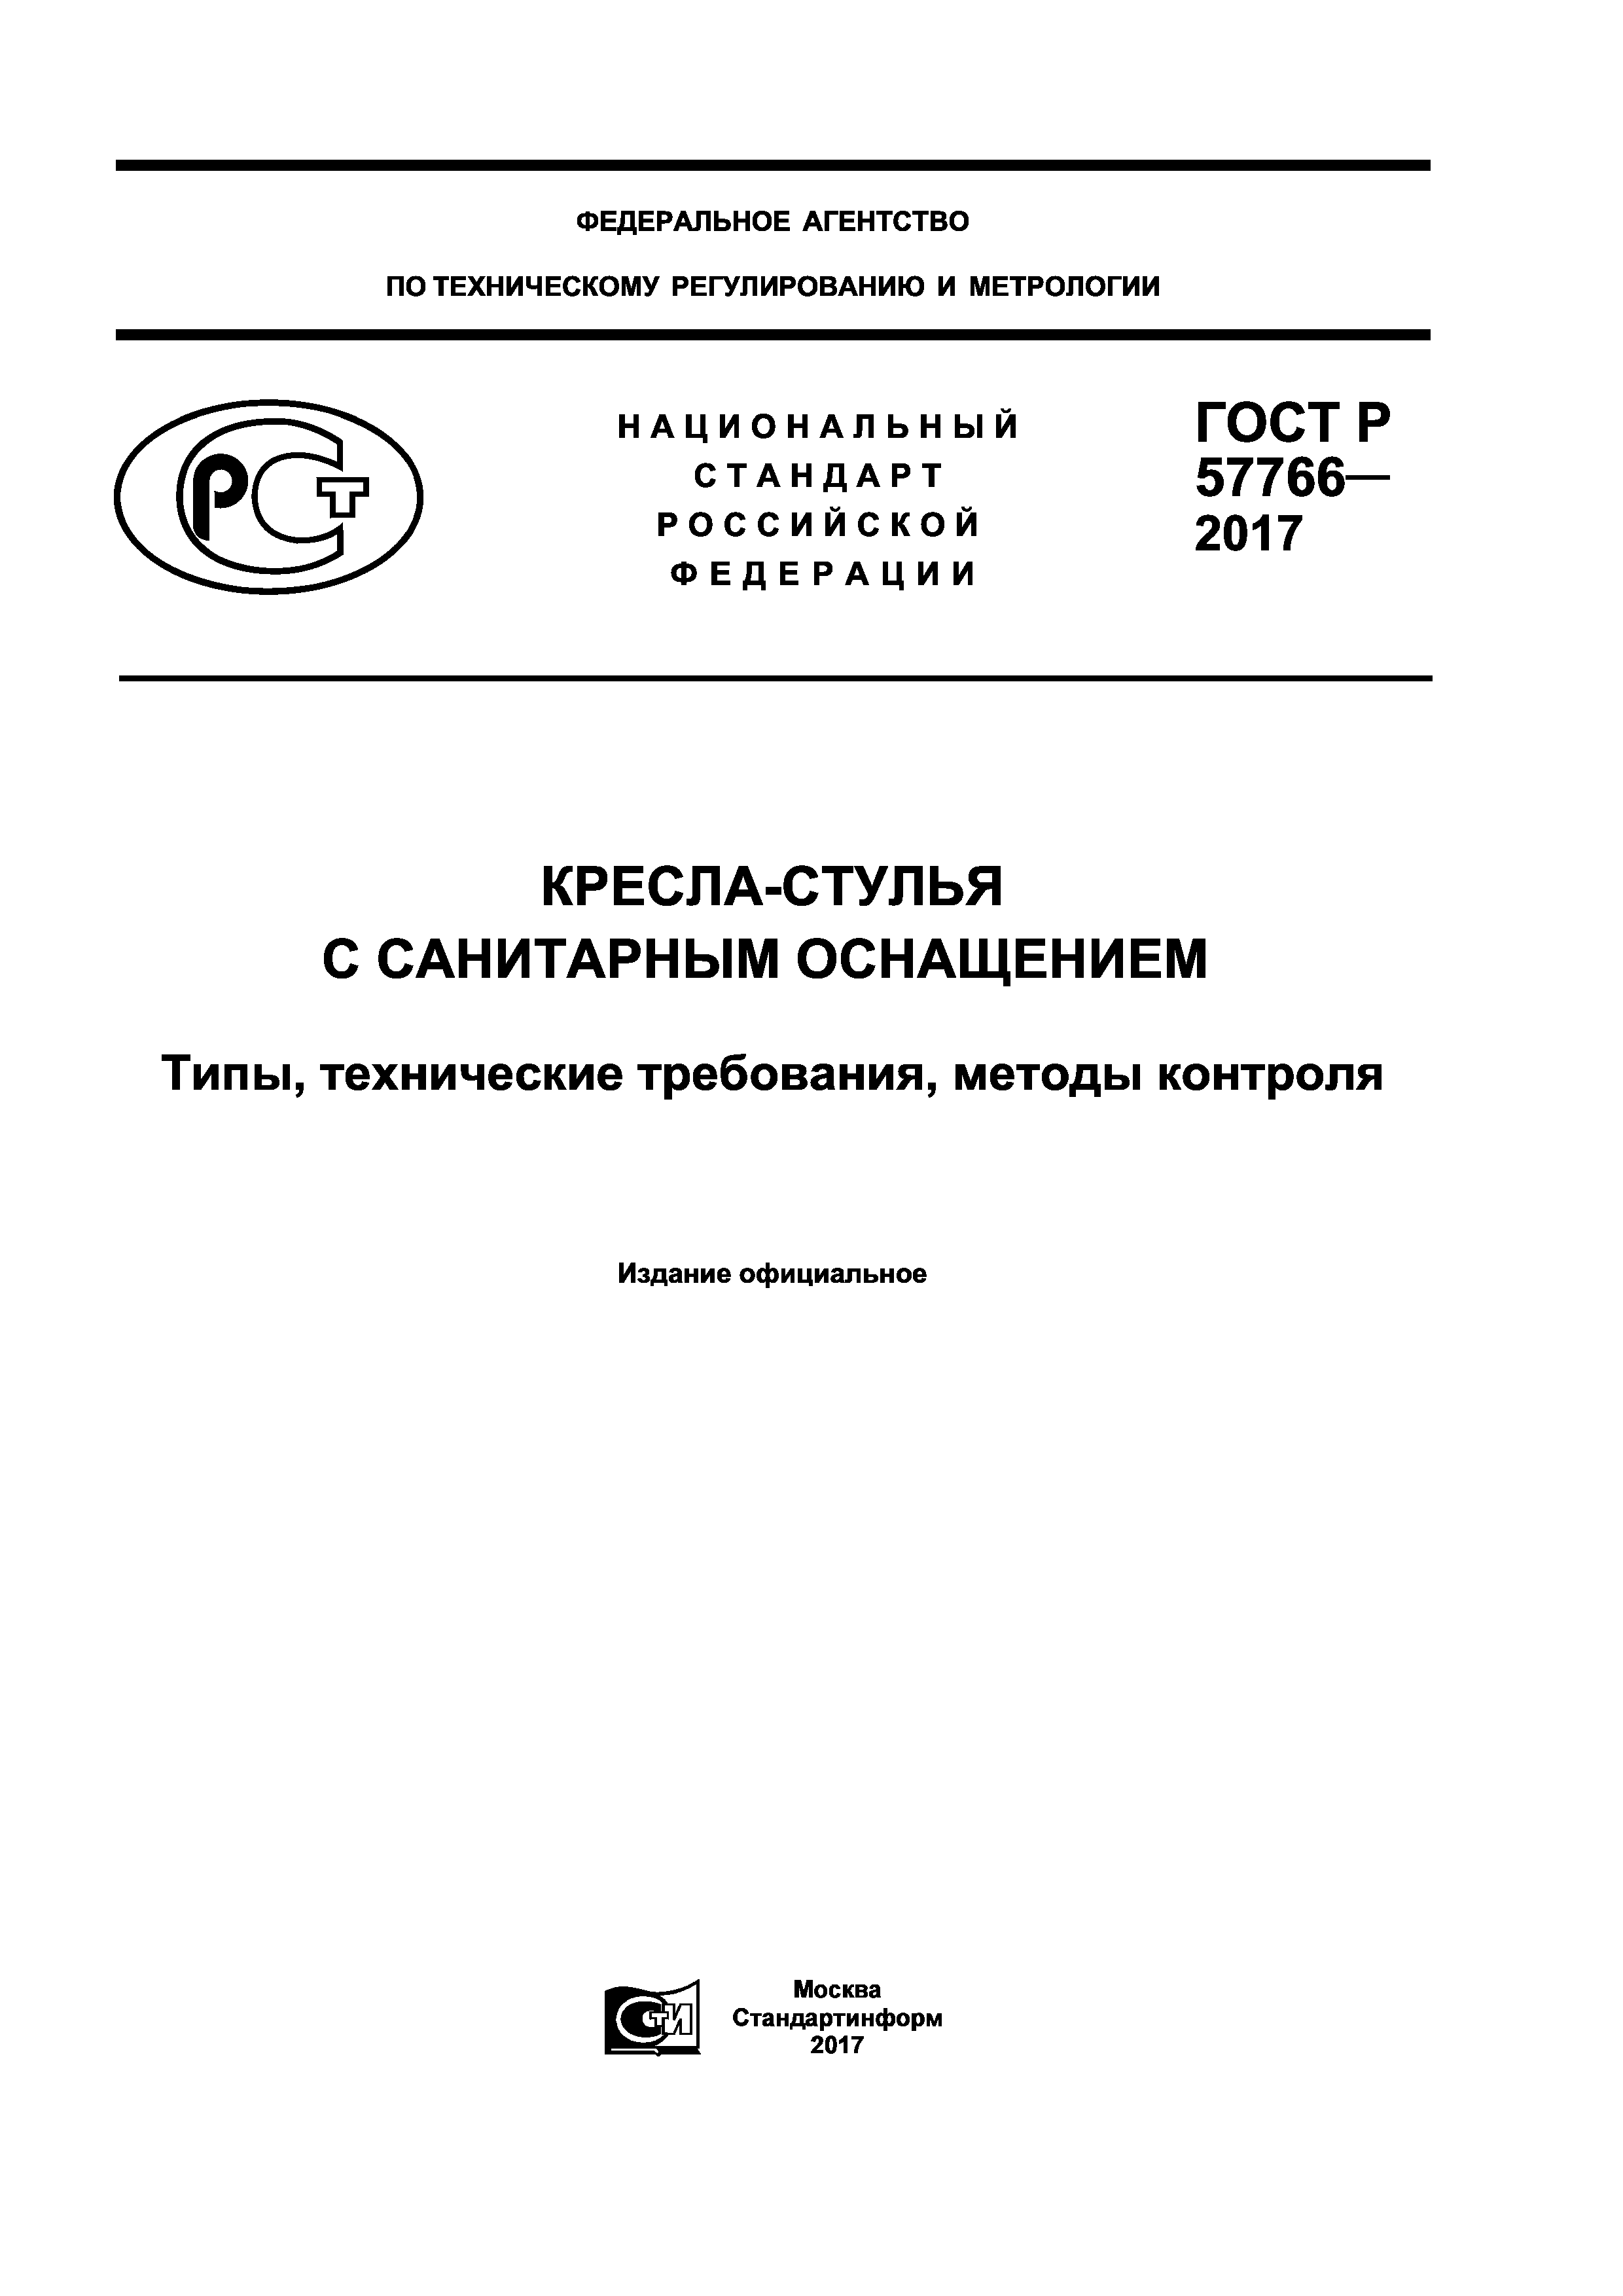 ГОСТ Р 57766-2017